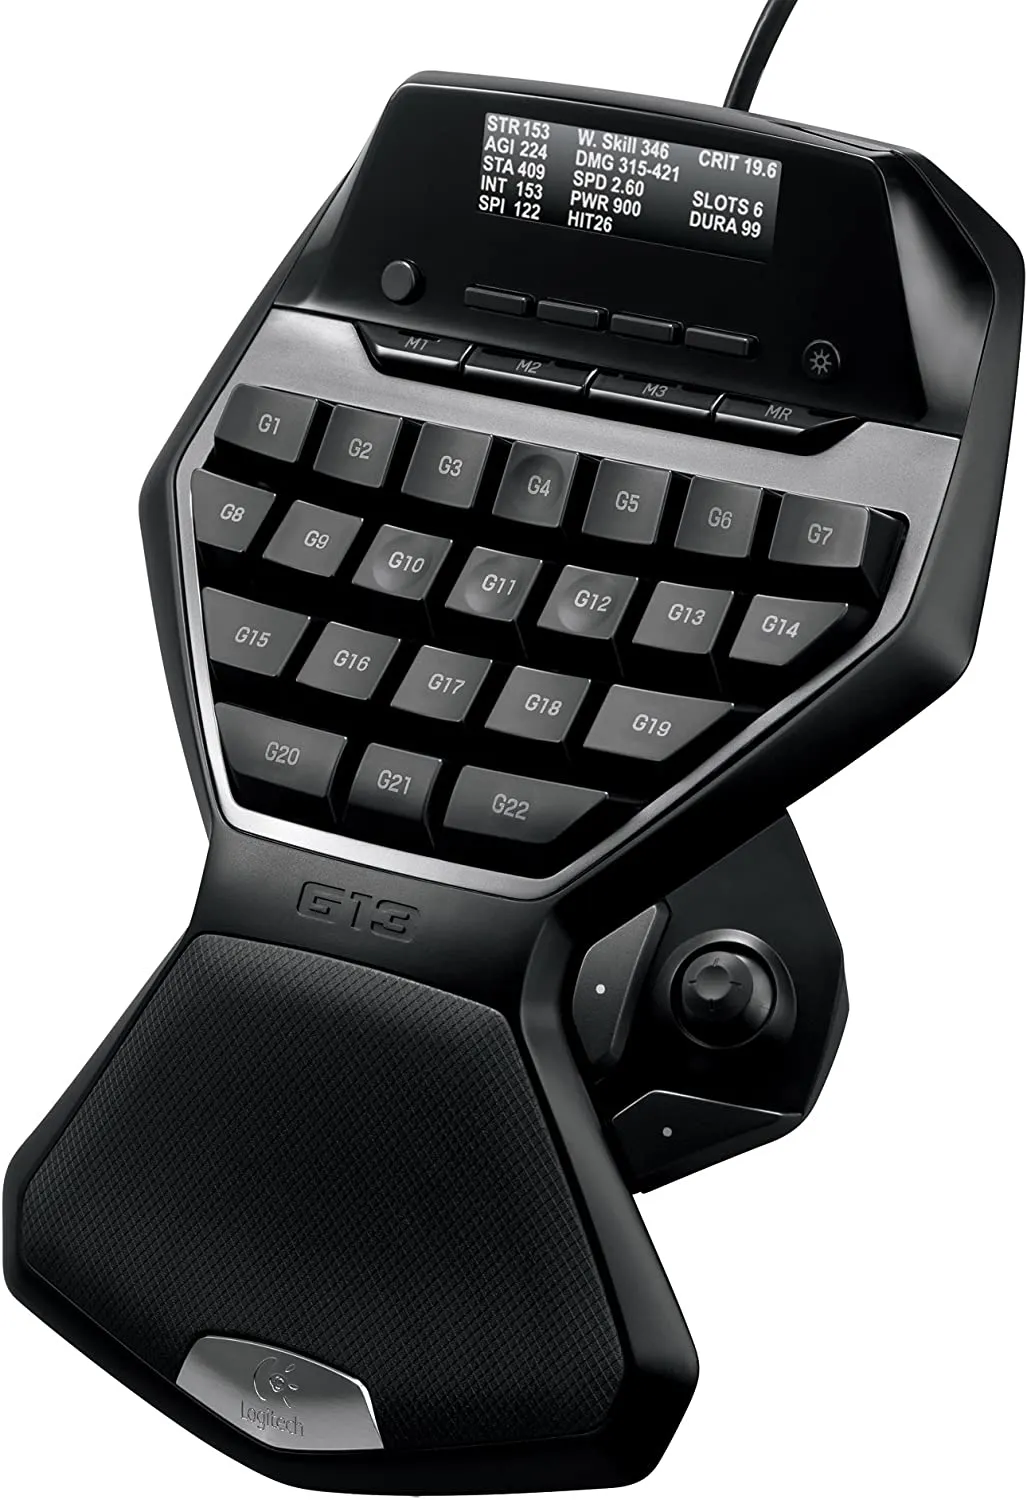 Logitech G13 Programmable Game Keyboard